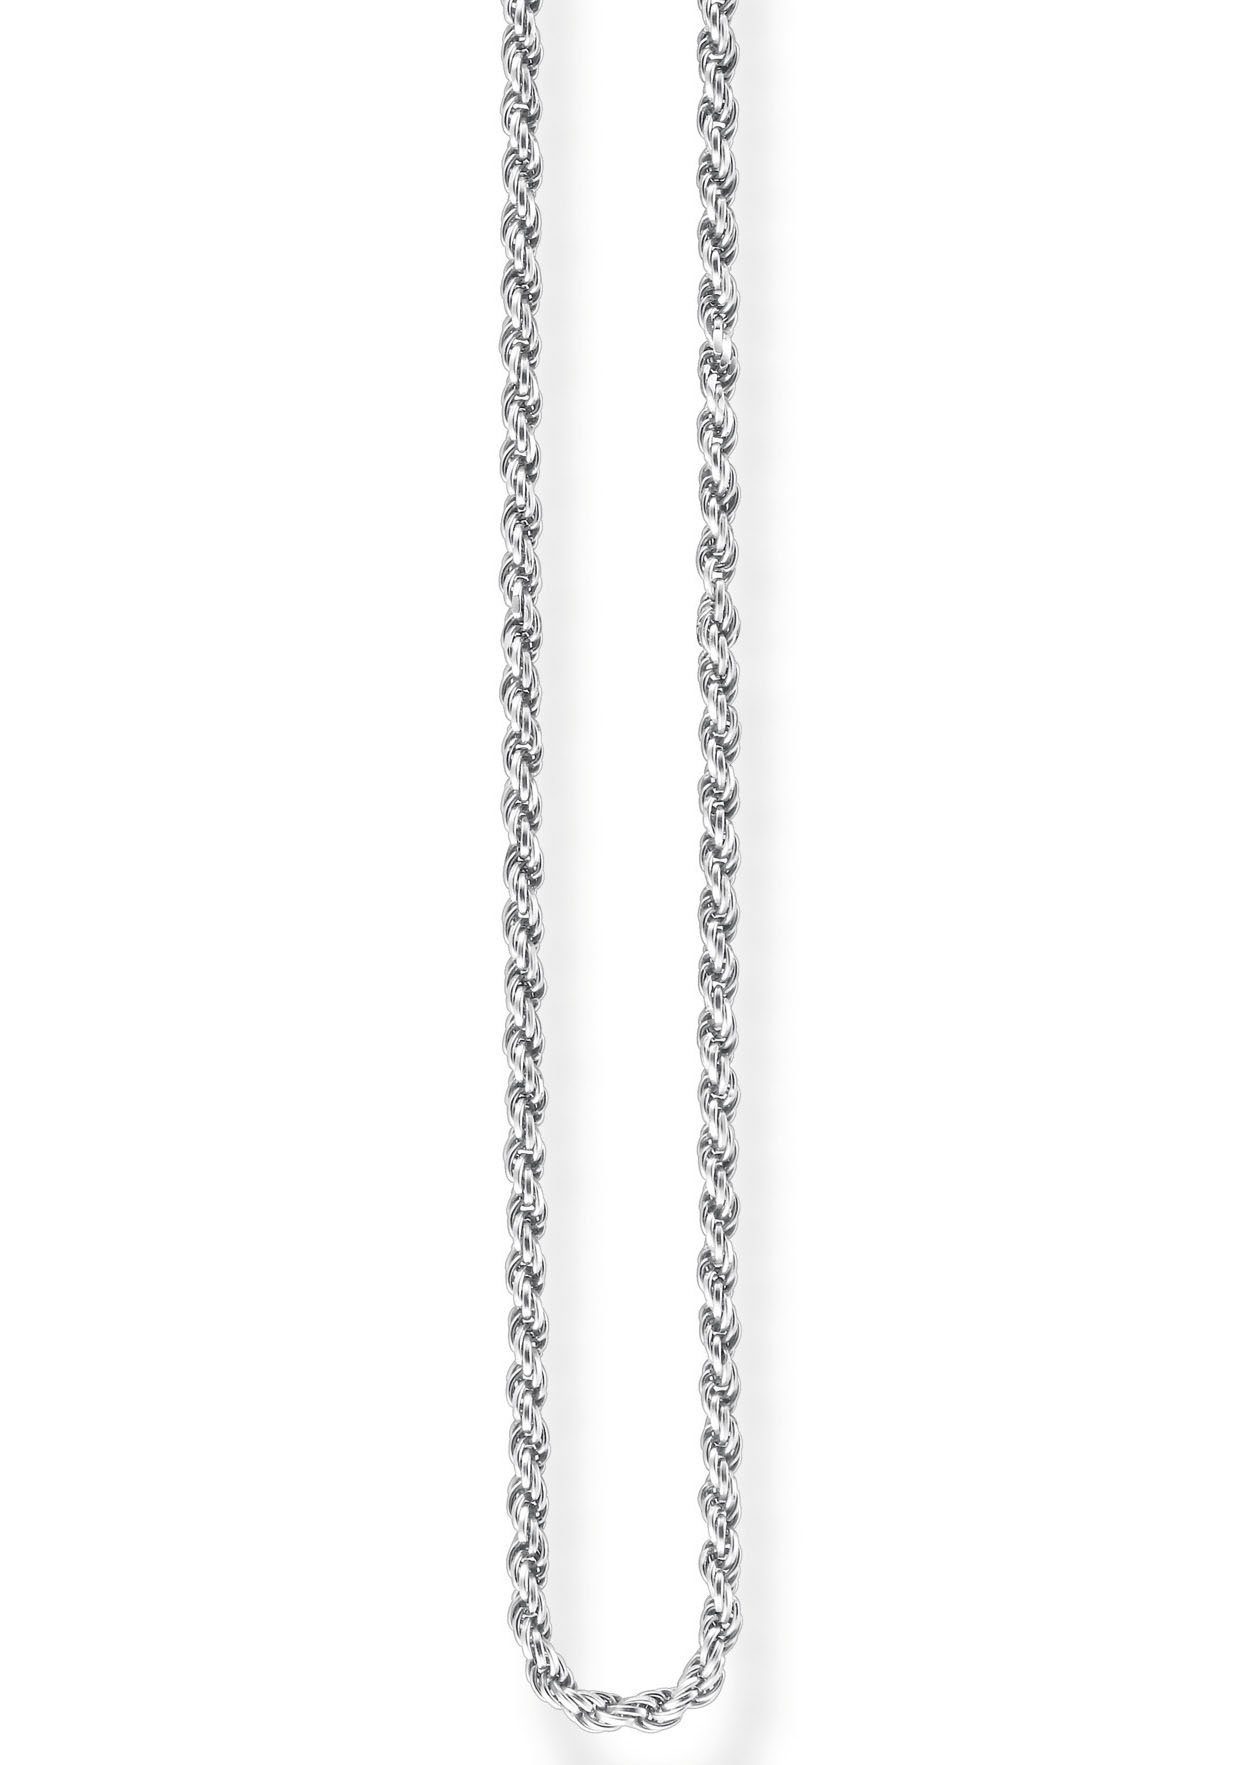 Kordelkette, KE1348-001-12-L40, KE1348-001-12-L50, SABO erhältlich THOMAS Silberkette verschiedenen In Längen